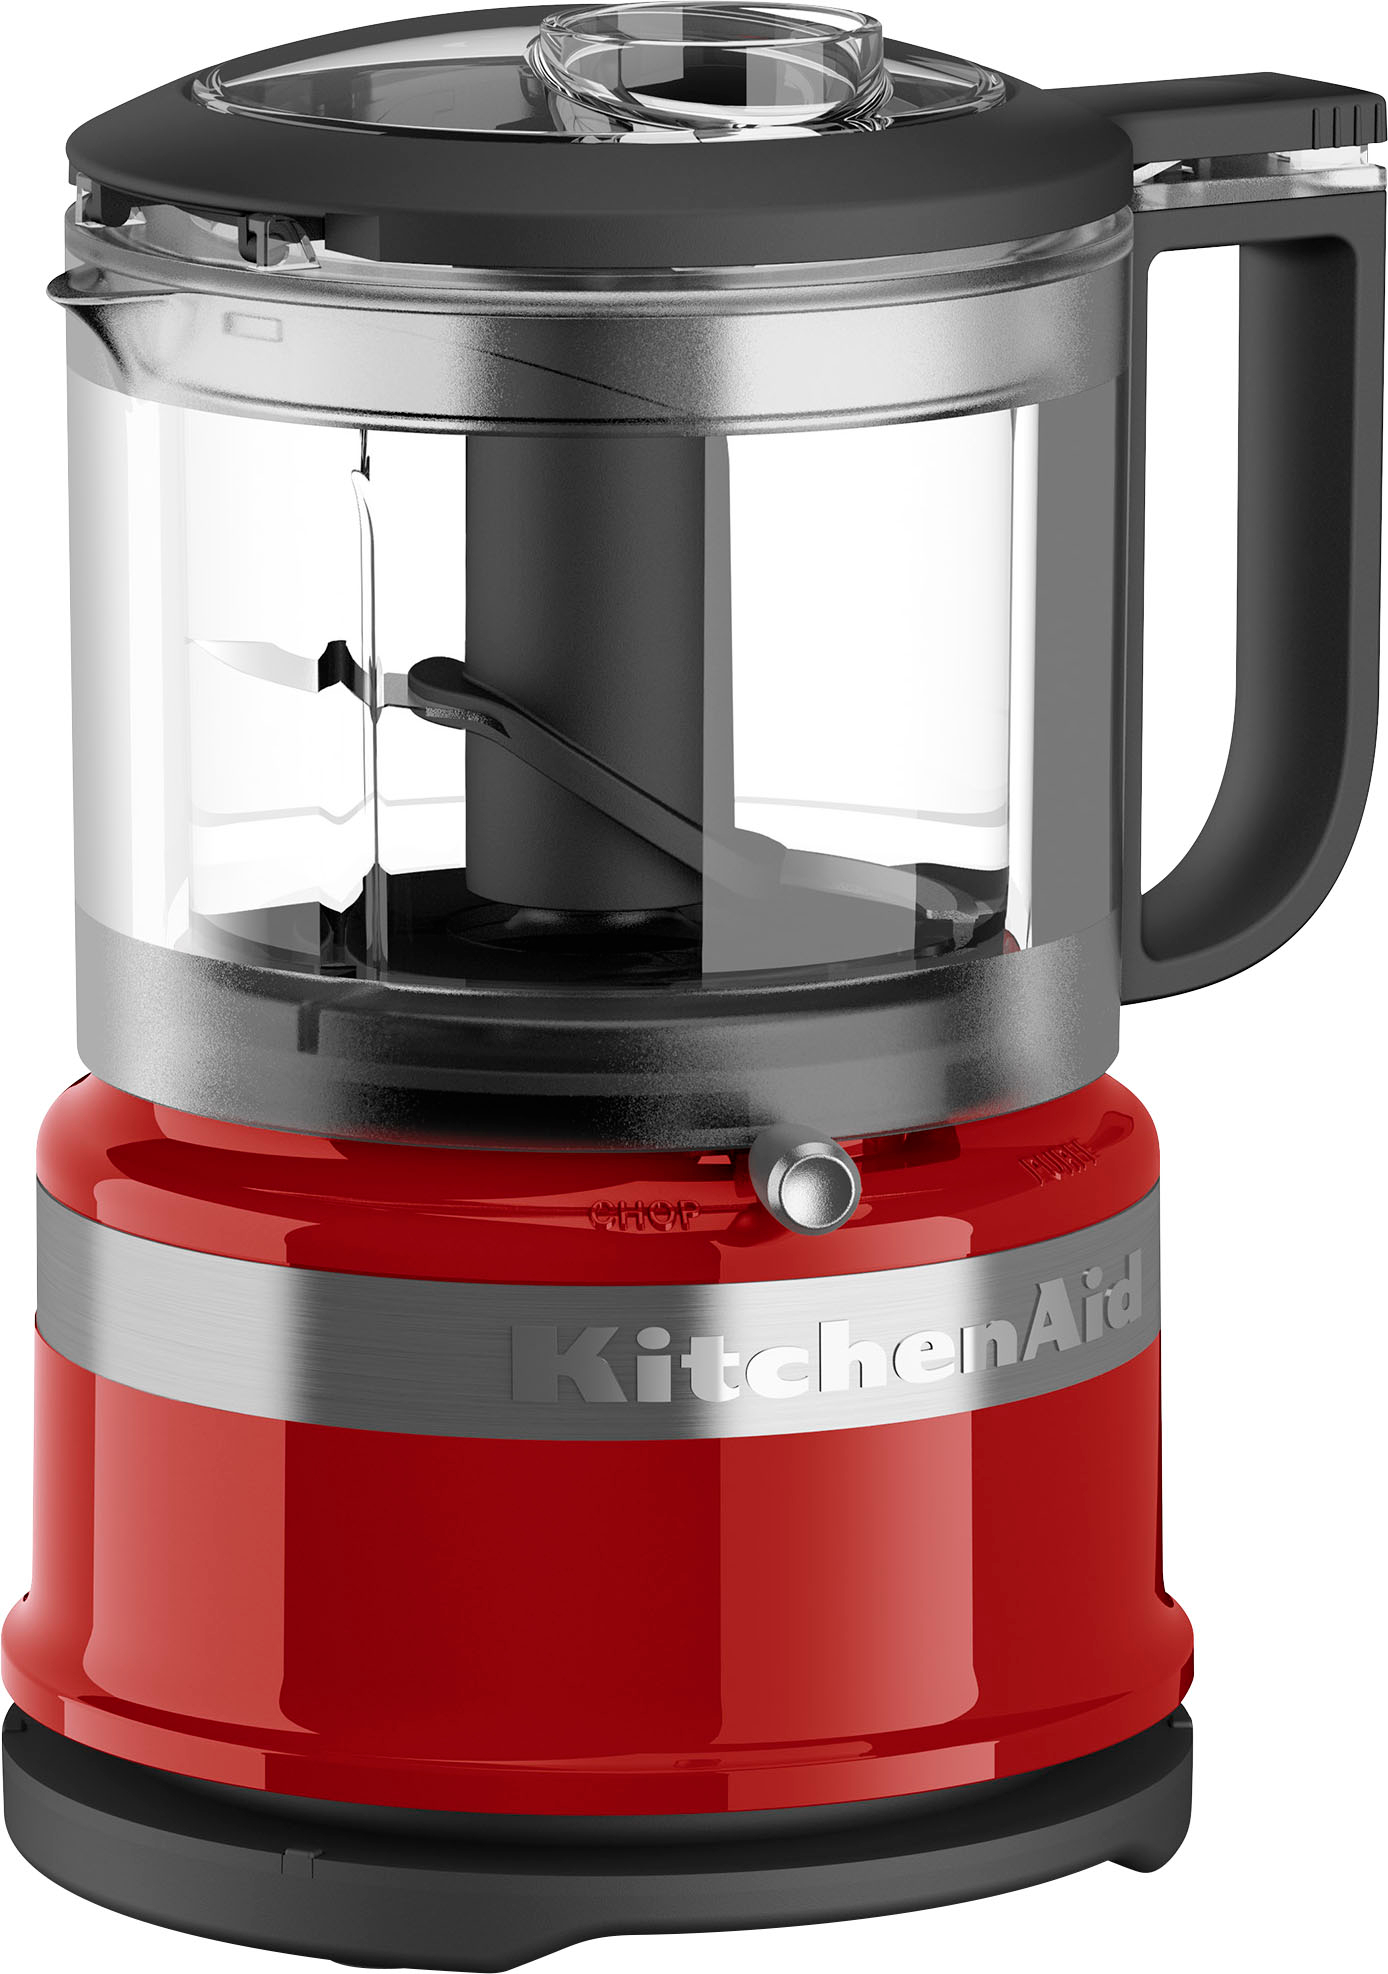 KitchenAid 3.5 Cup Food Chopper KFC3516 Empire Red KFC3516ER - Best Buy